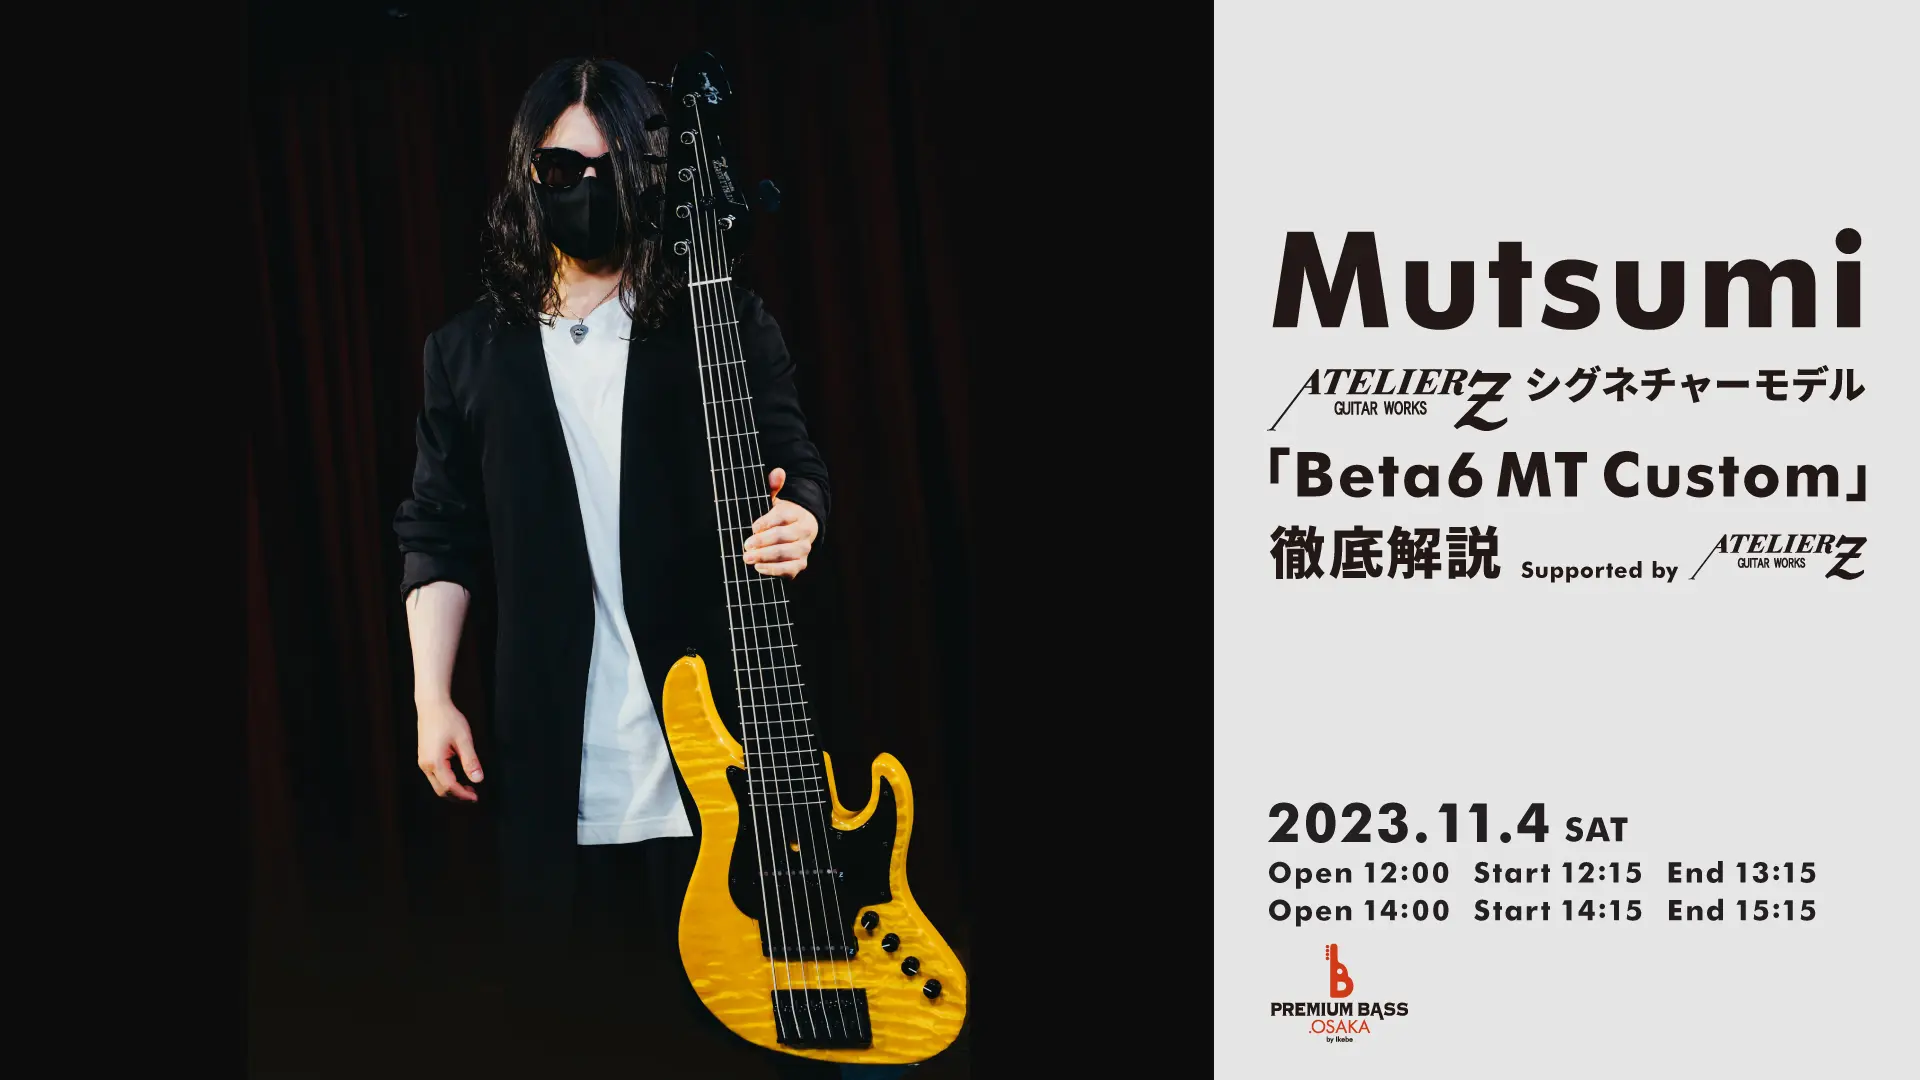 Mutsumi Atelier Z シグネチャーモデル「Beta6 MT Custom」徹底解説 Supported by Atelier Z